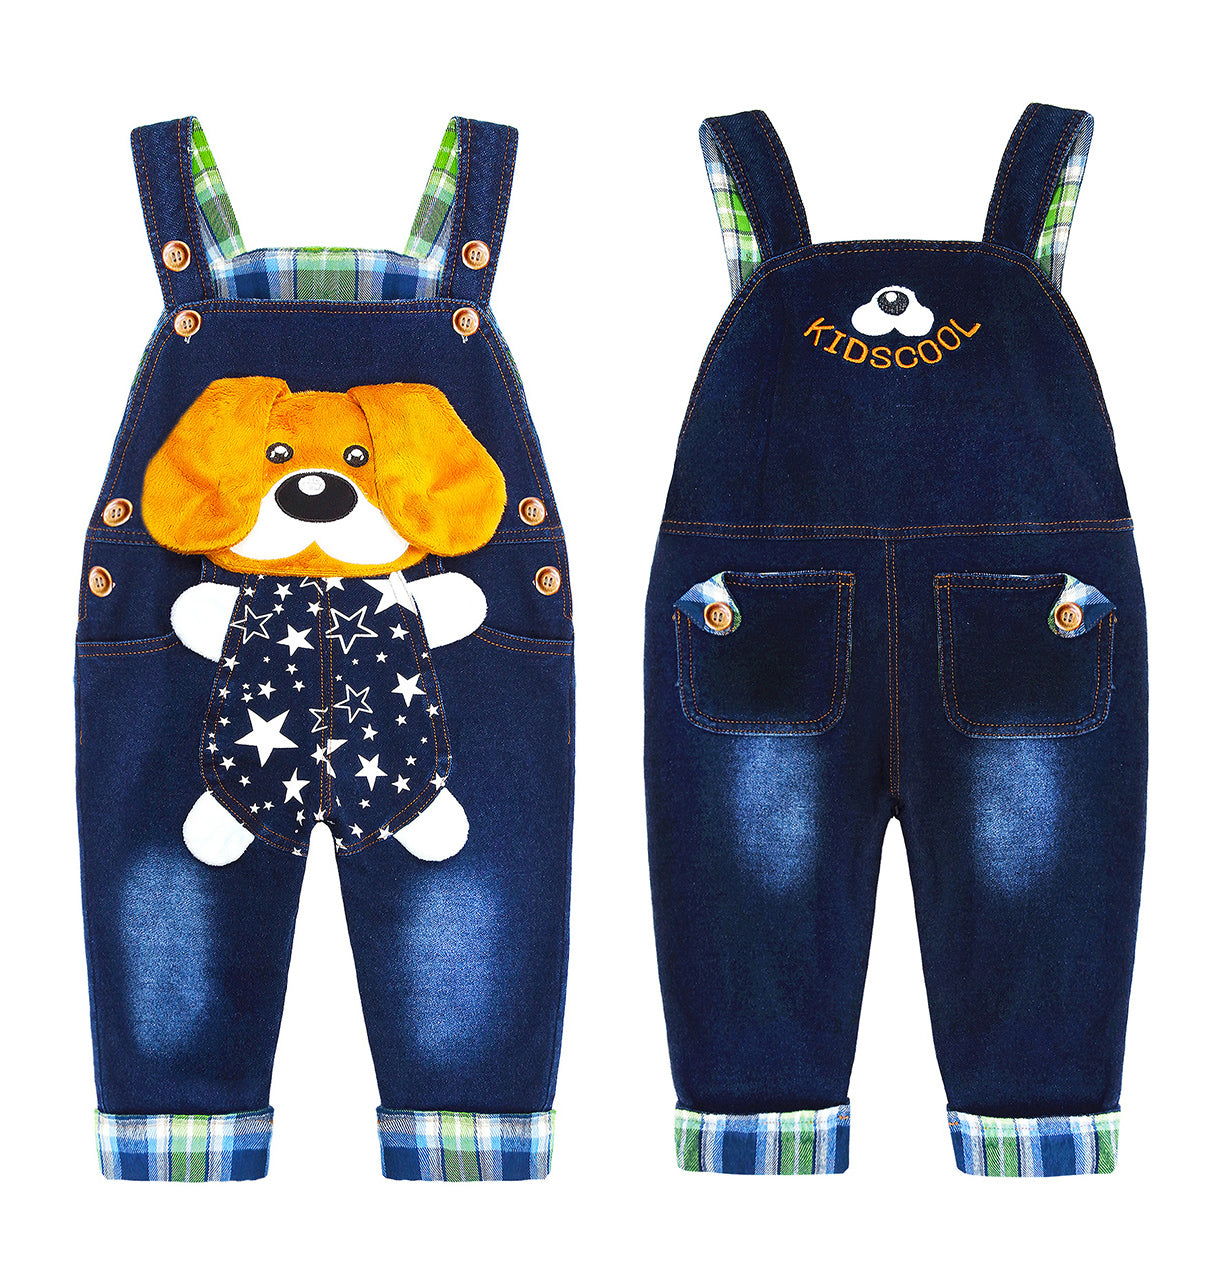 Toddler cartoon dog soft overalls